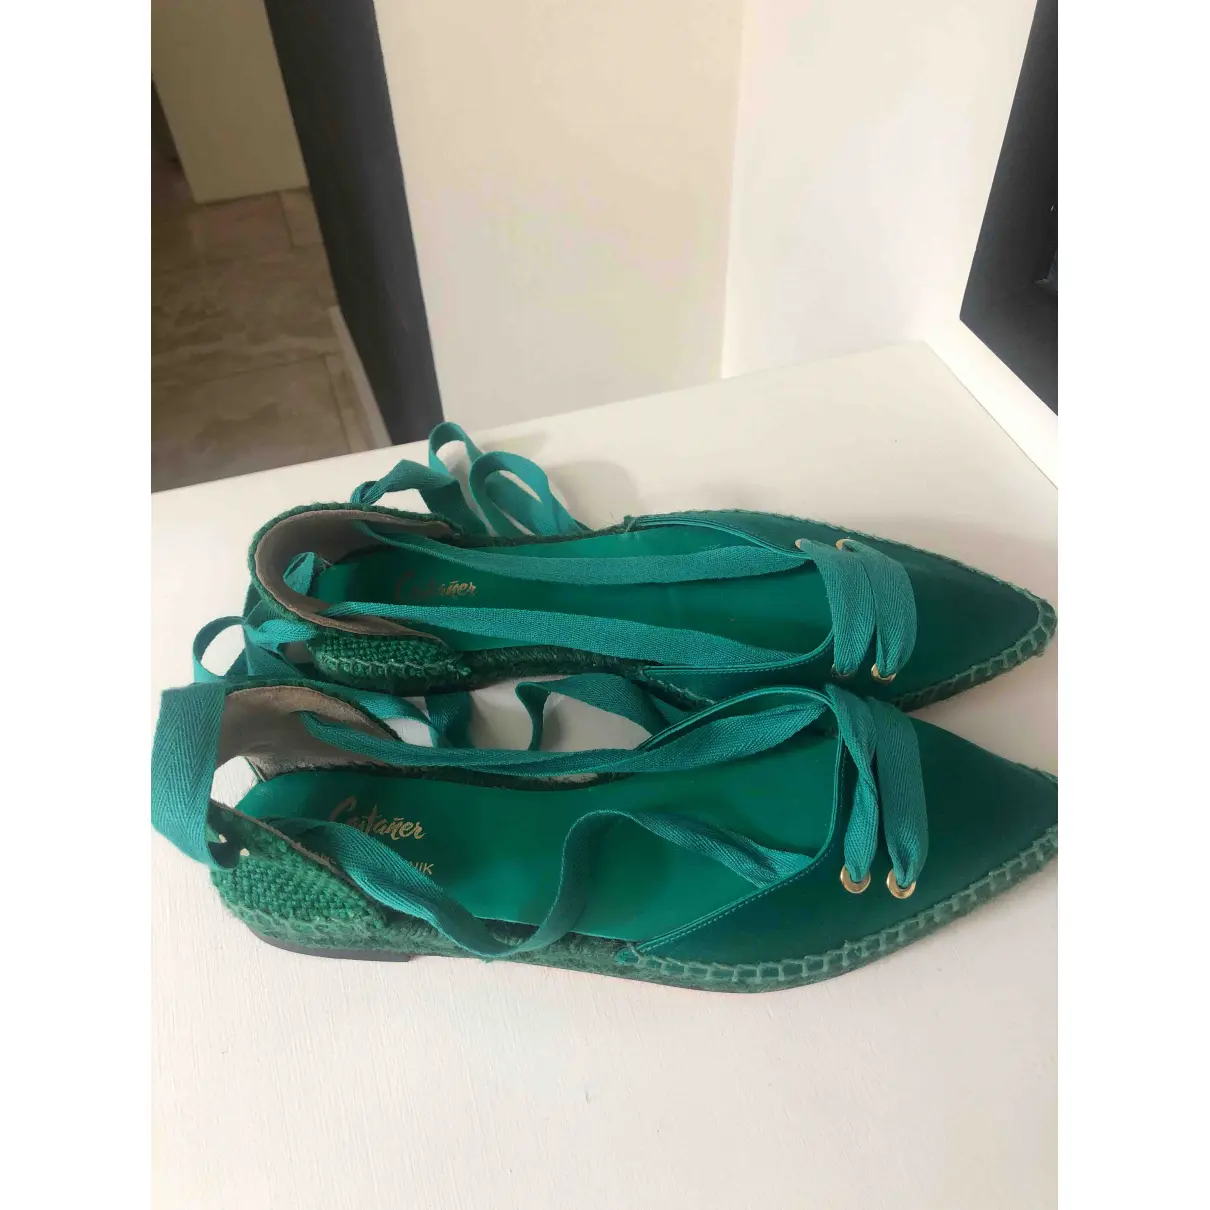 Buy Manolo Blahnik Cloth sandals online